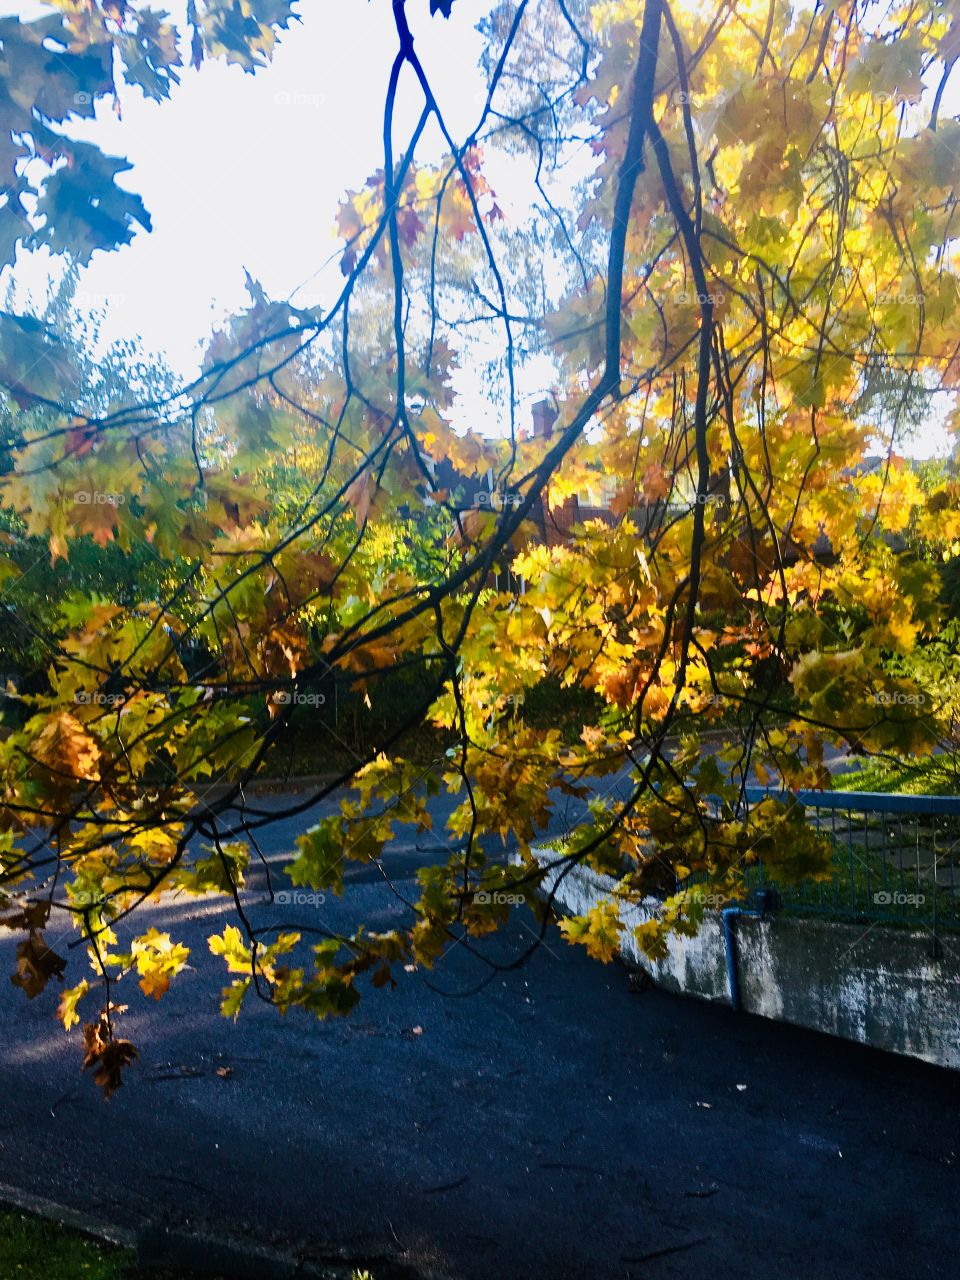 Autumn Leaves 01-Octobre 18 2018- Montreal, Quebec, Canada